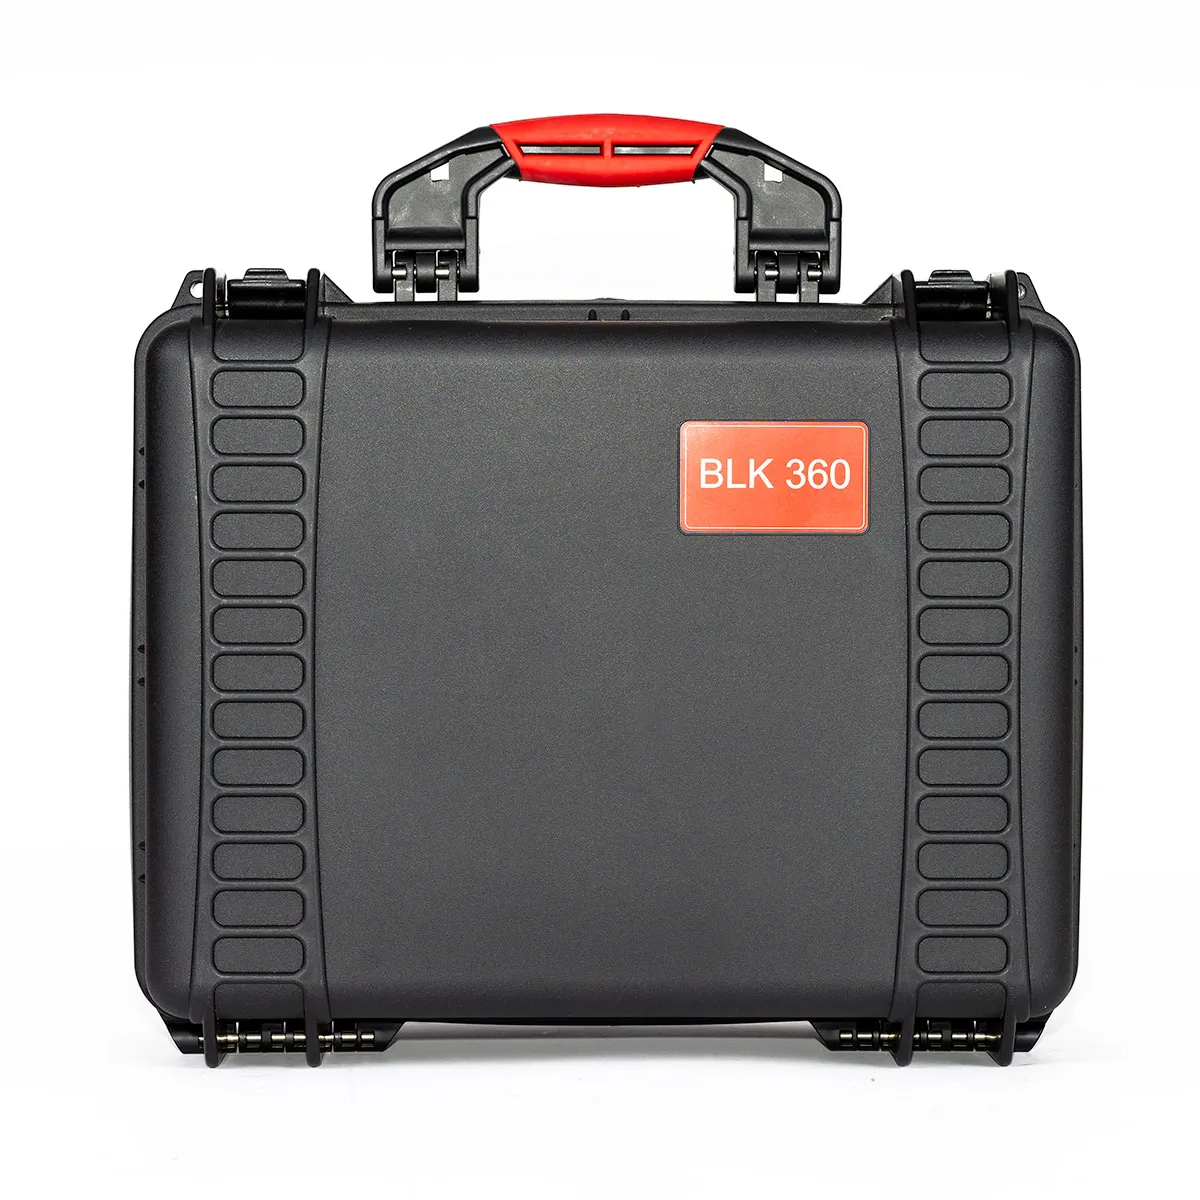 HPRC 2460 Hard Case for Leica G1 BLK360 Scanner & Accessories (Black) **